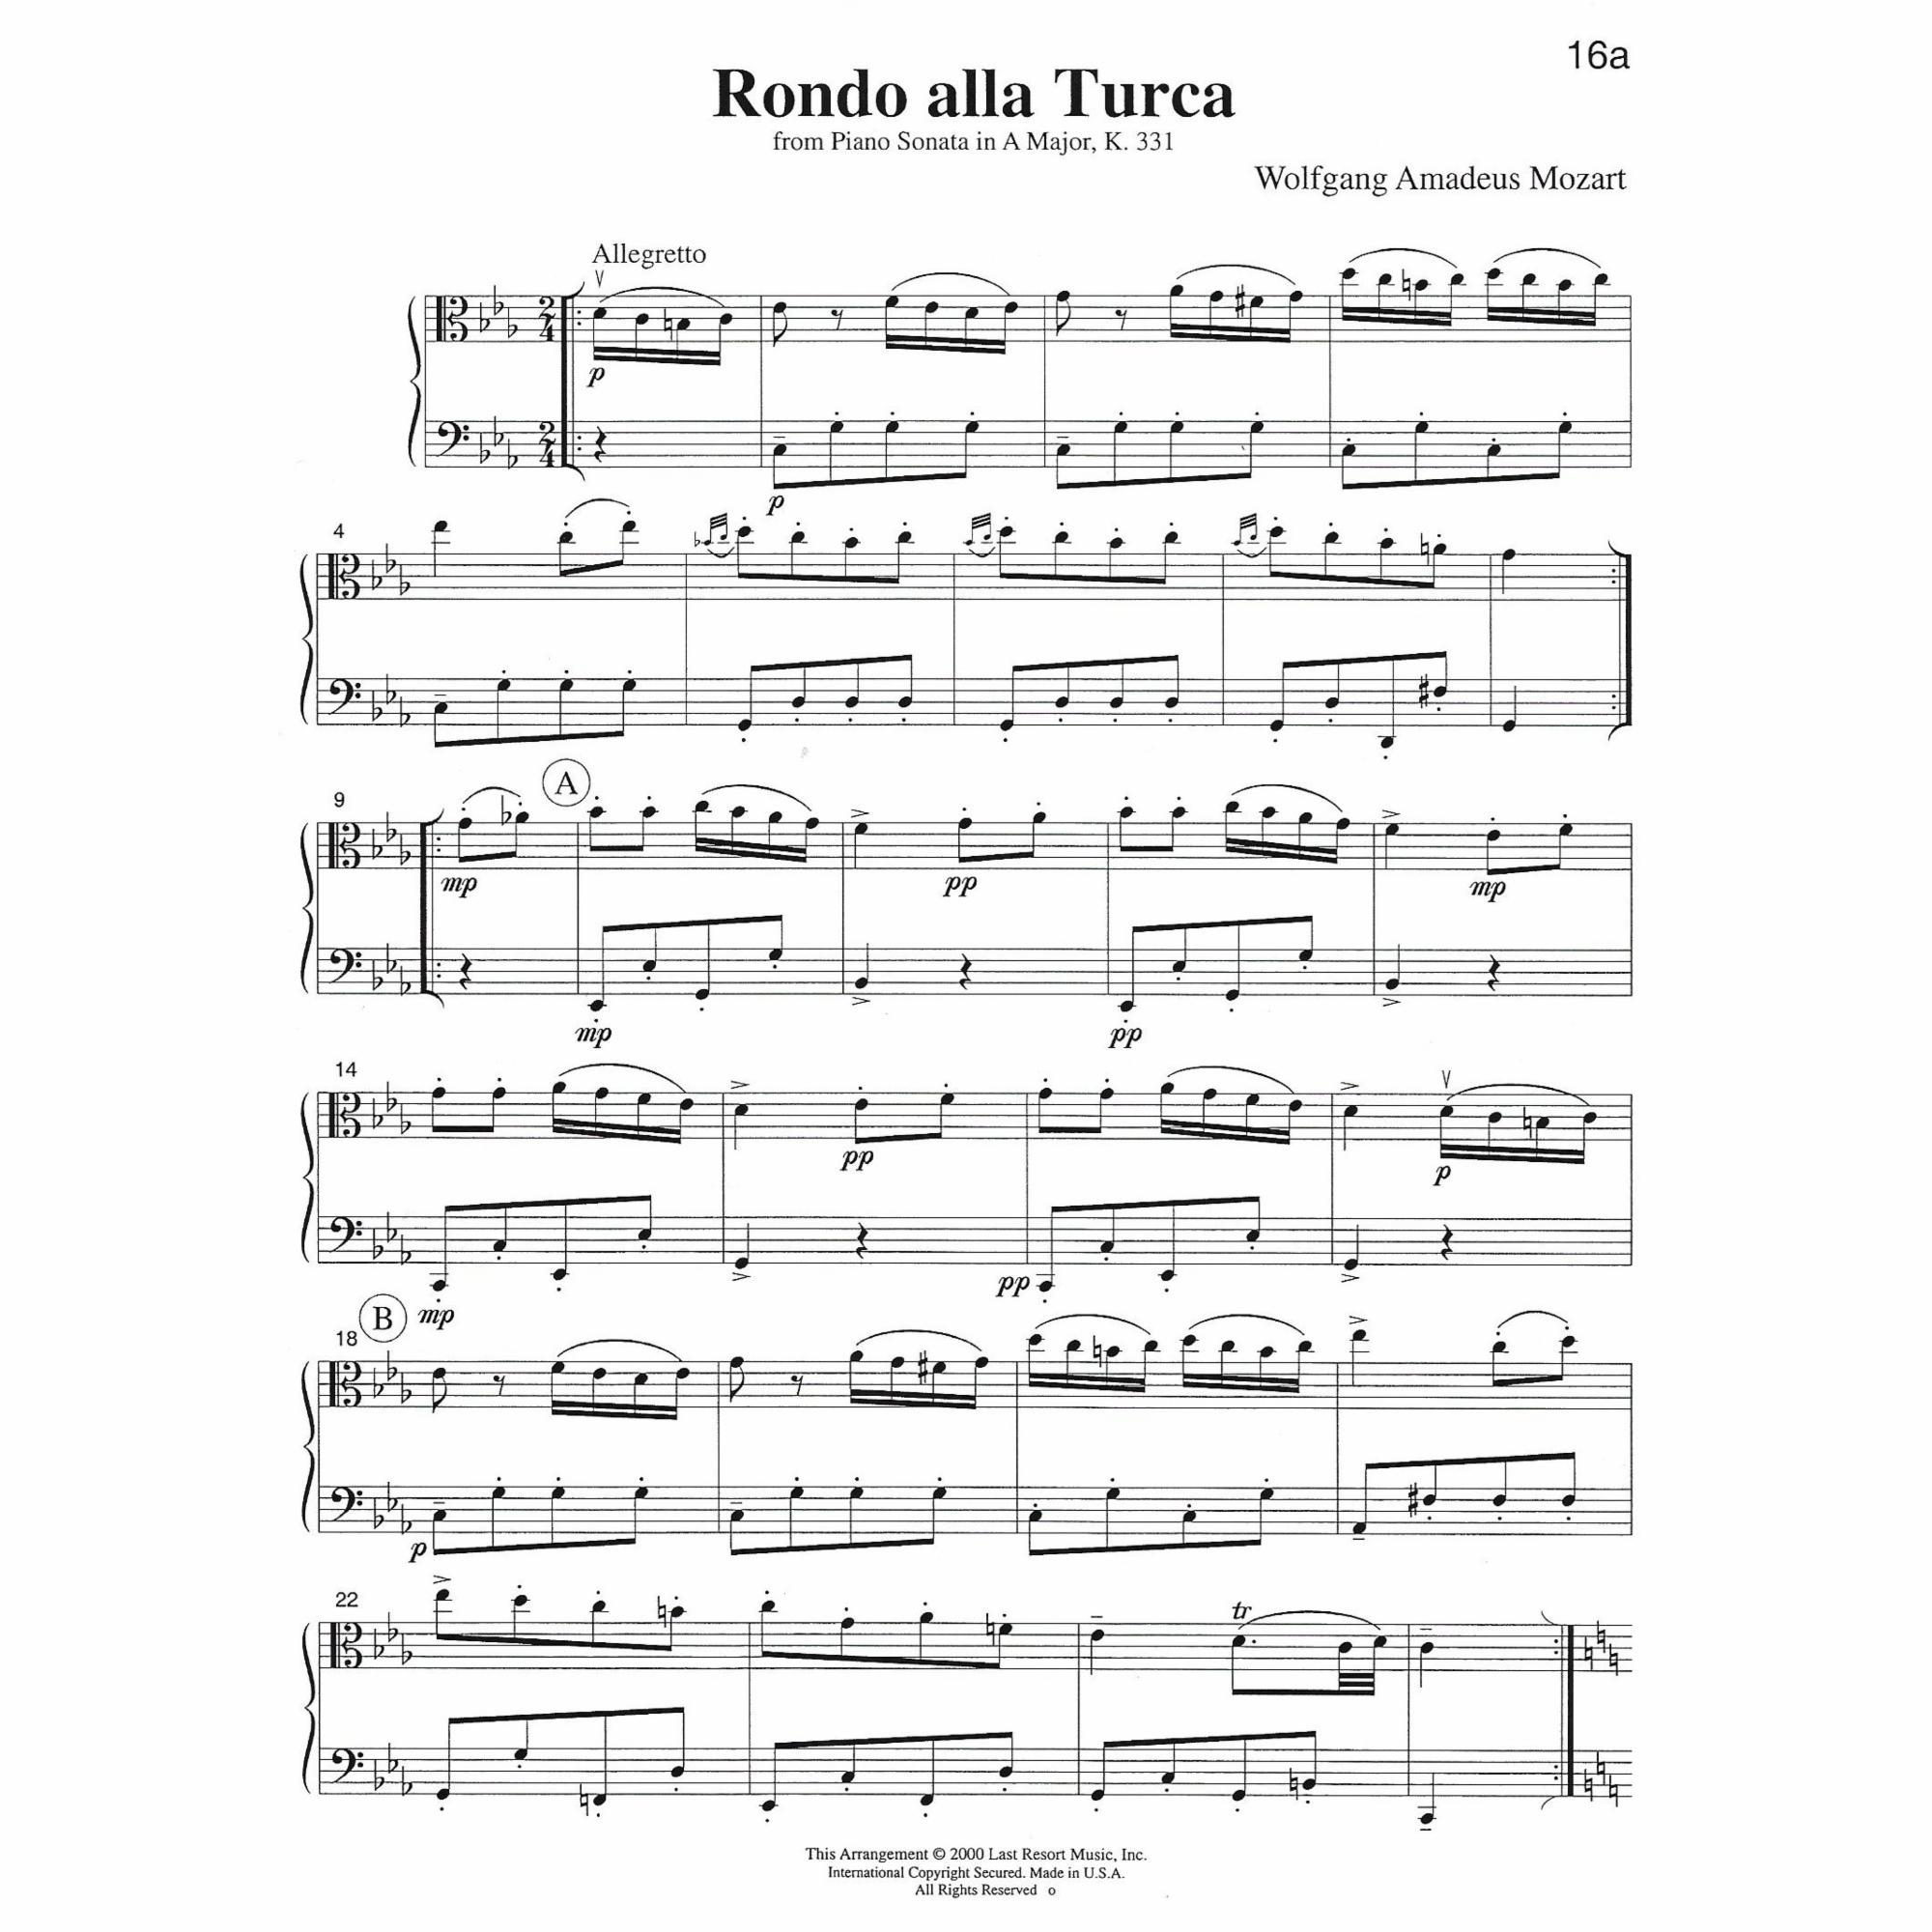 Sample: Viola and Cello (Pg. 16a)